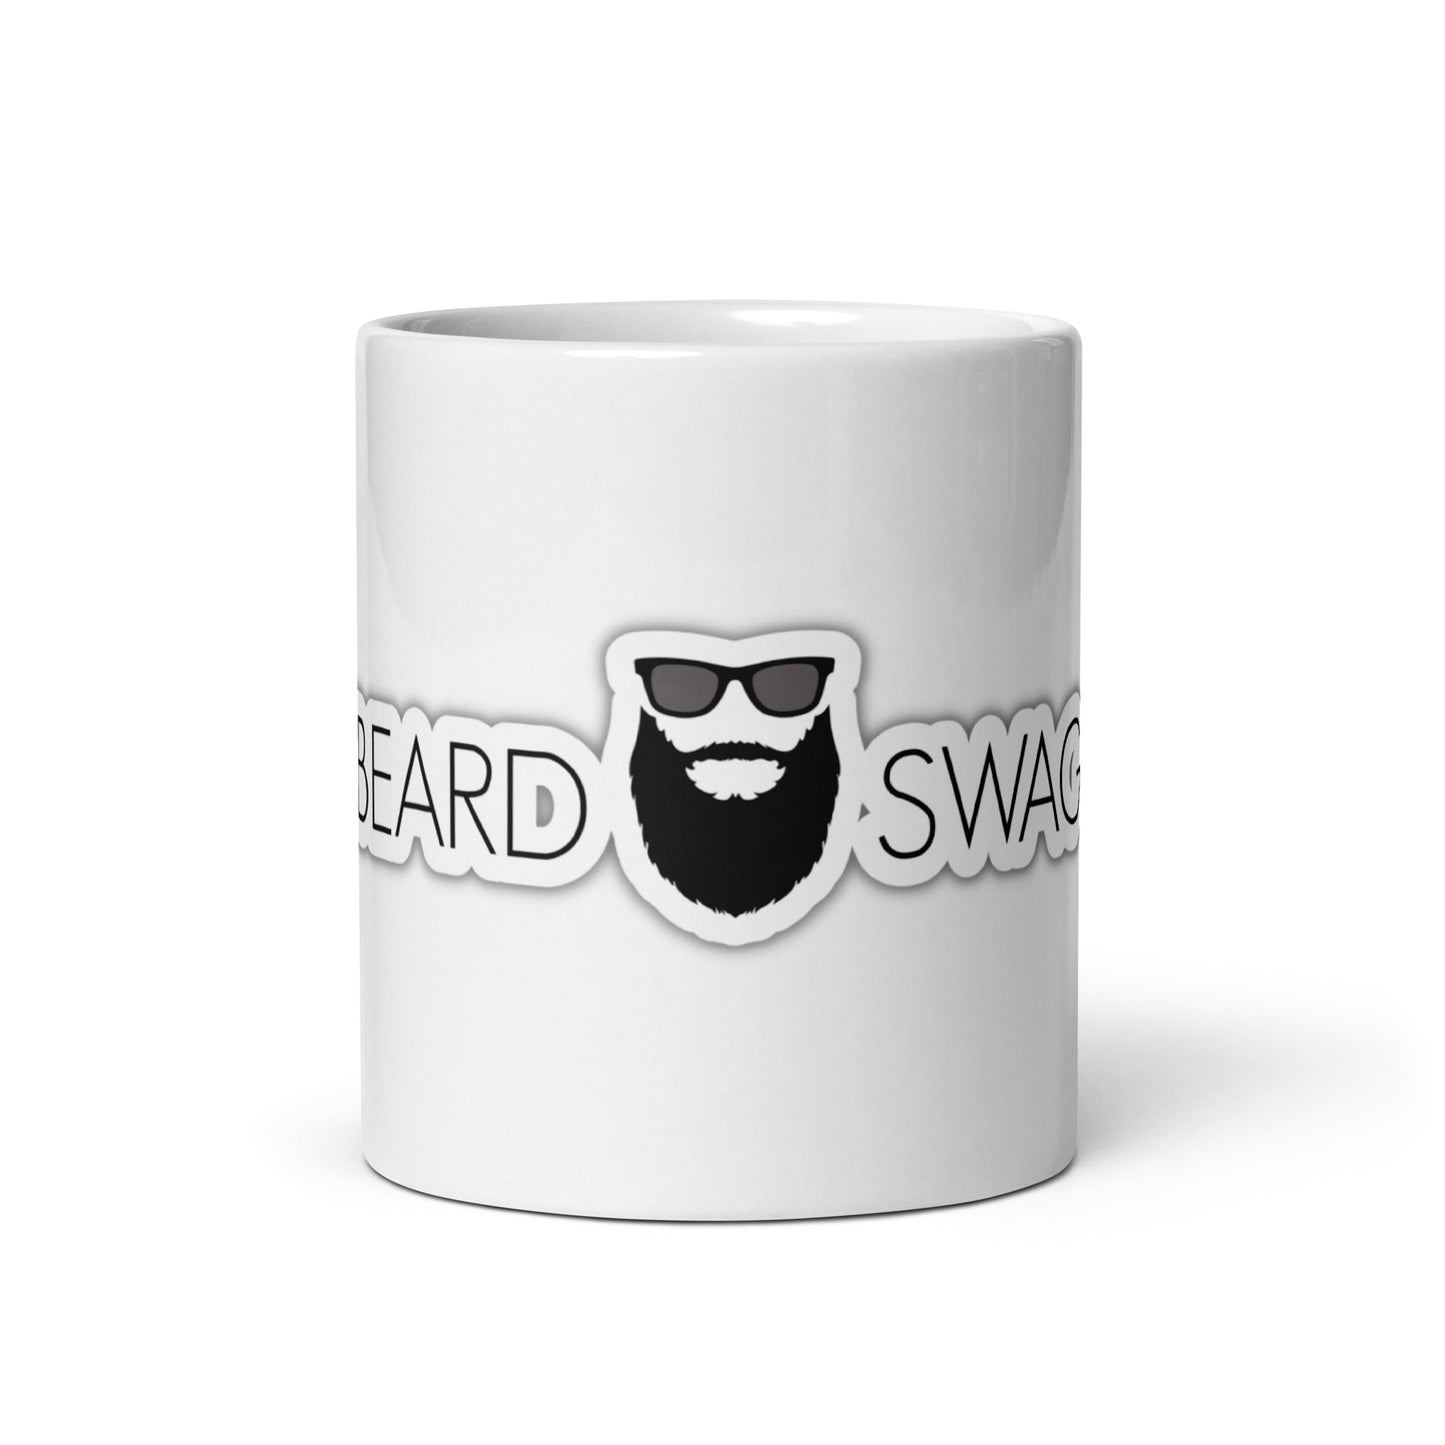 Beard Swag MugLife - Beard Swag